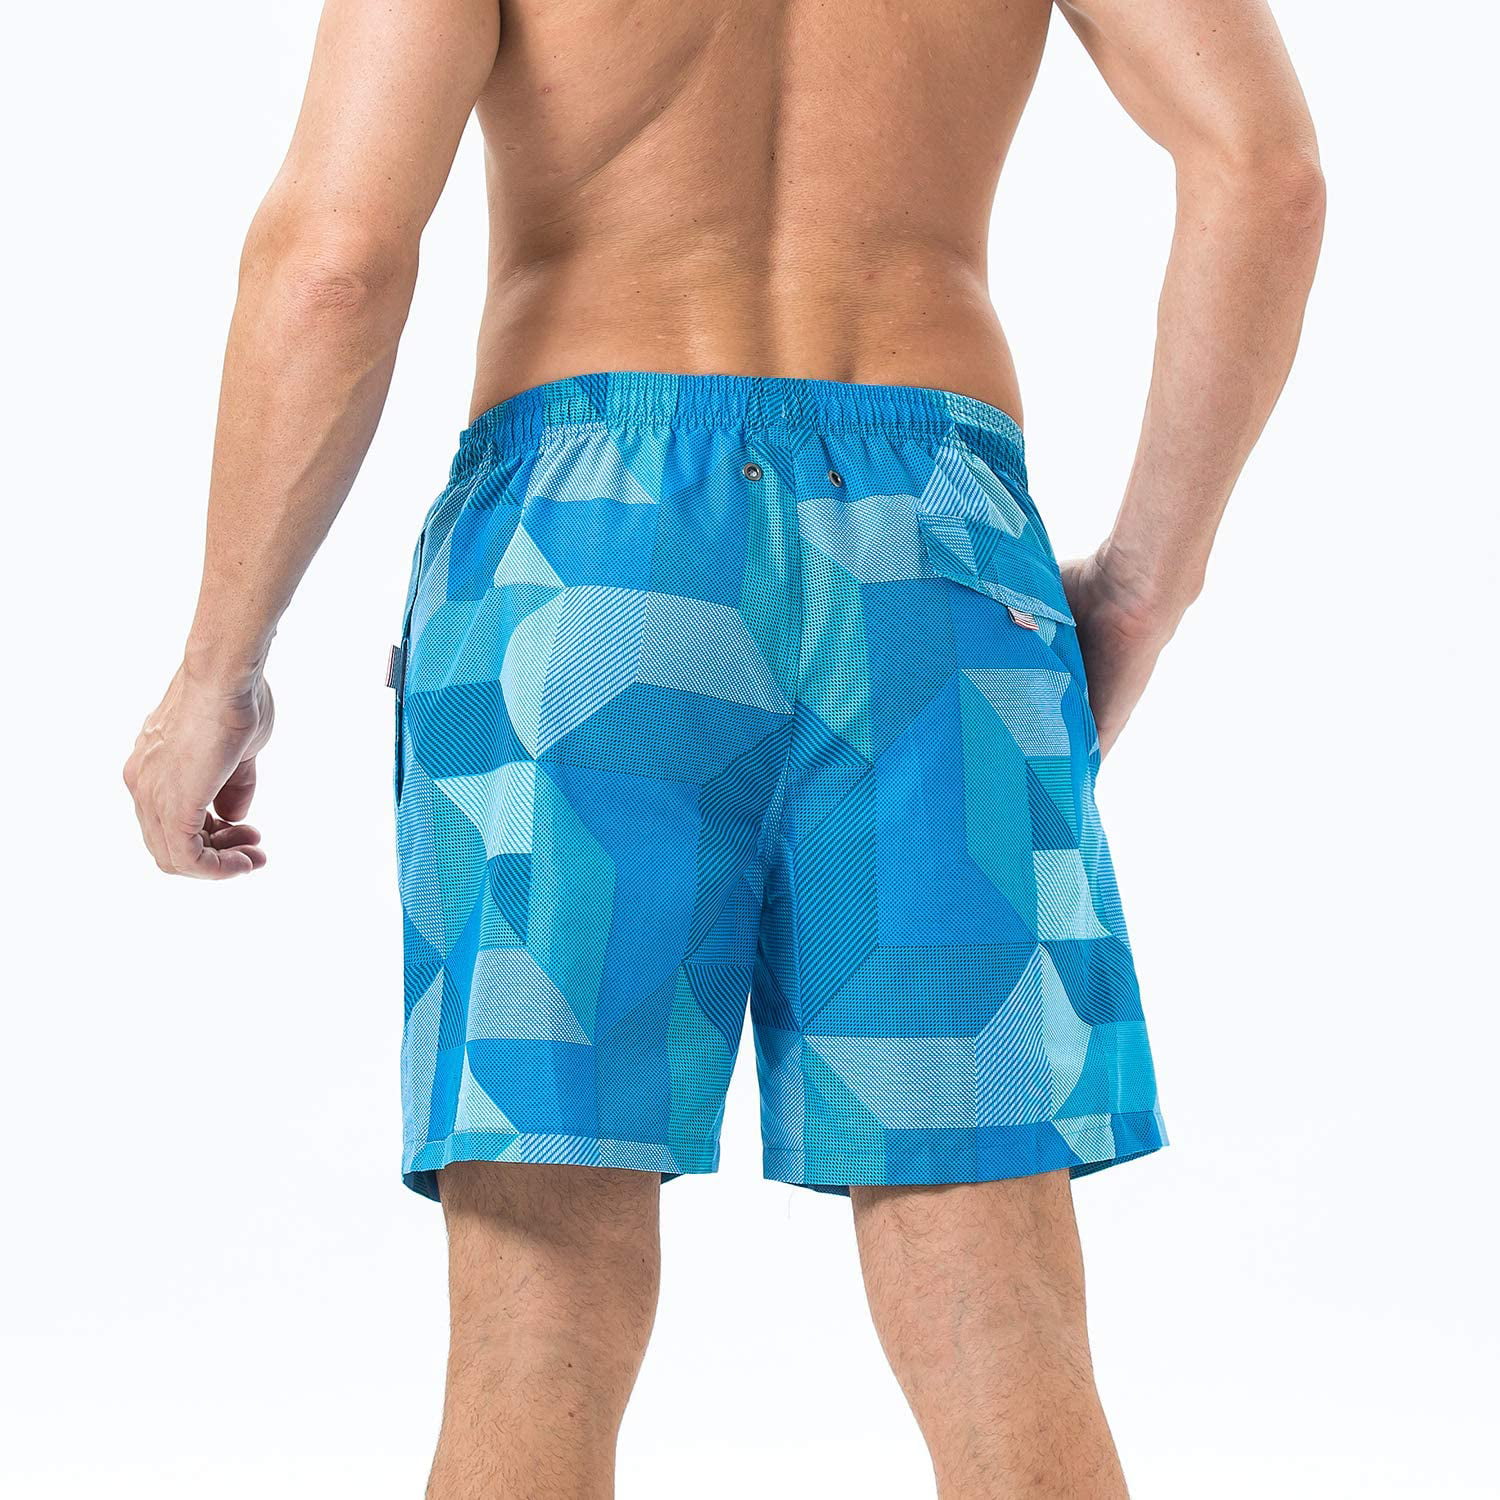 anqier Mens Swim Trunks Quick Dry Swim Shorts with Mesh Lining Swimwear Bathing Suits 